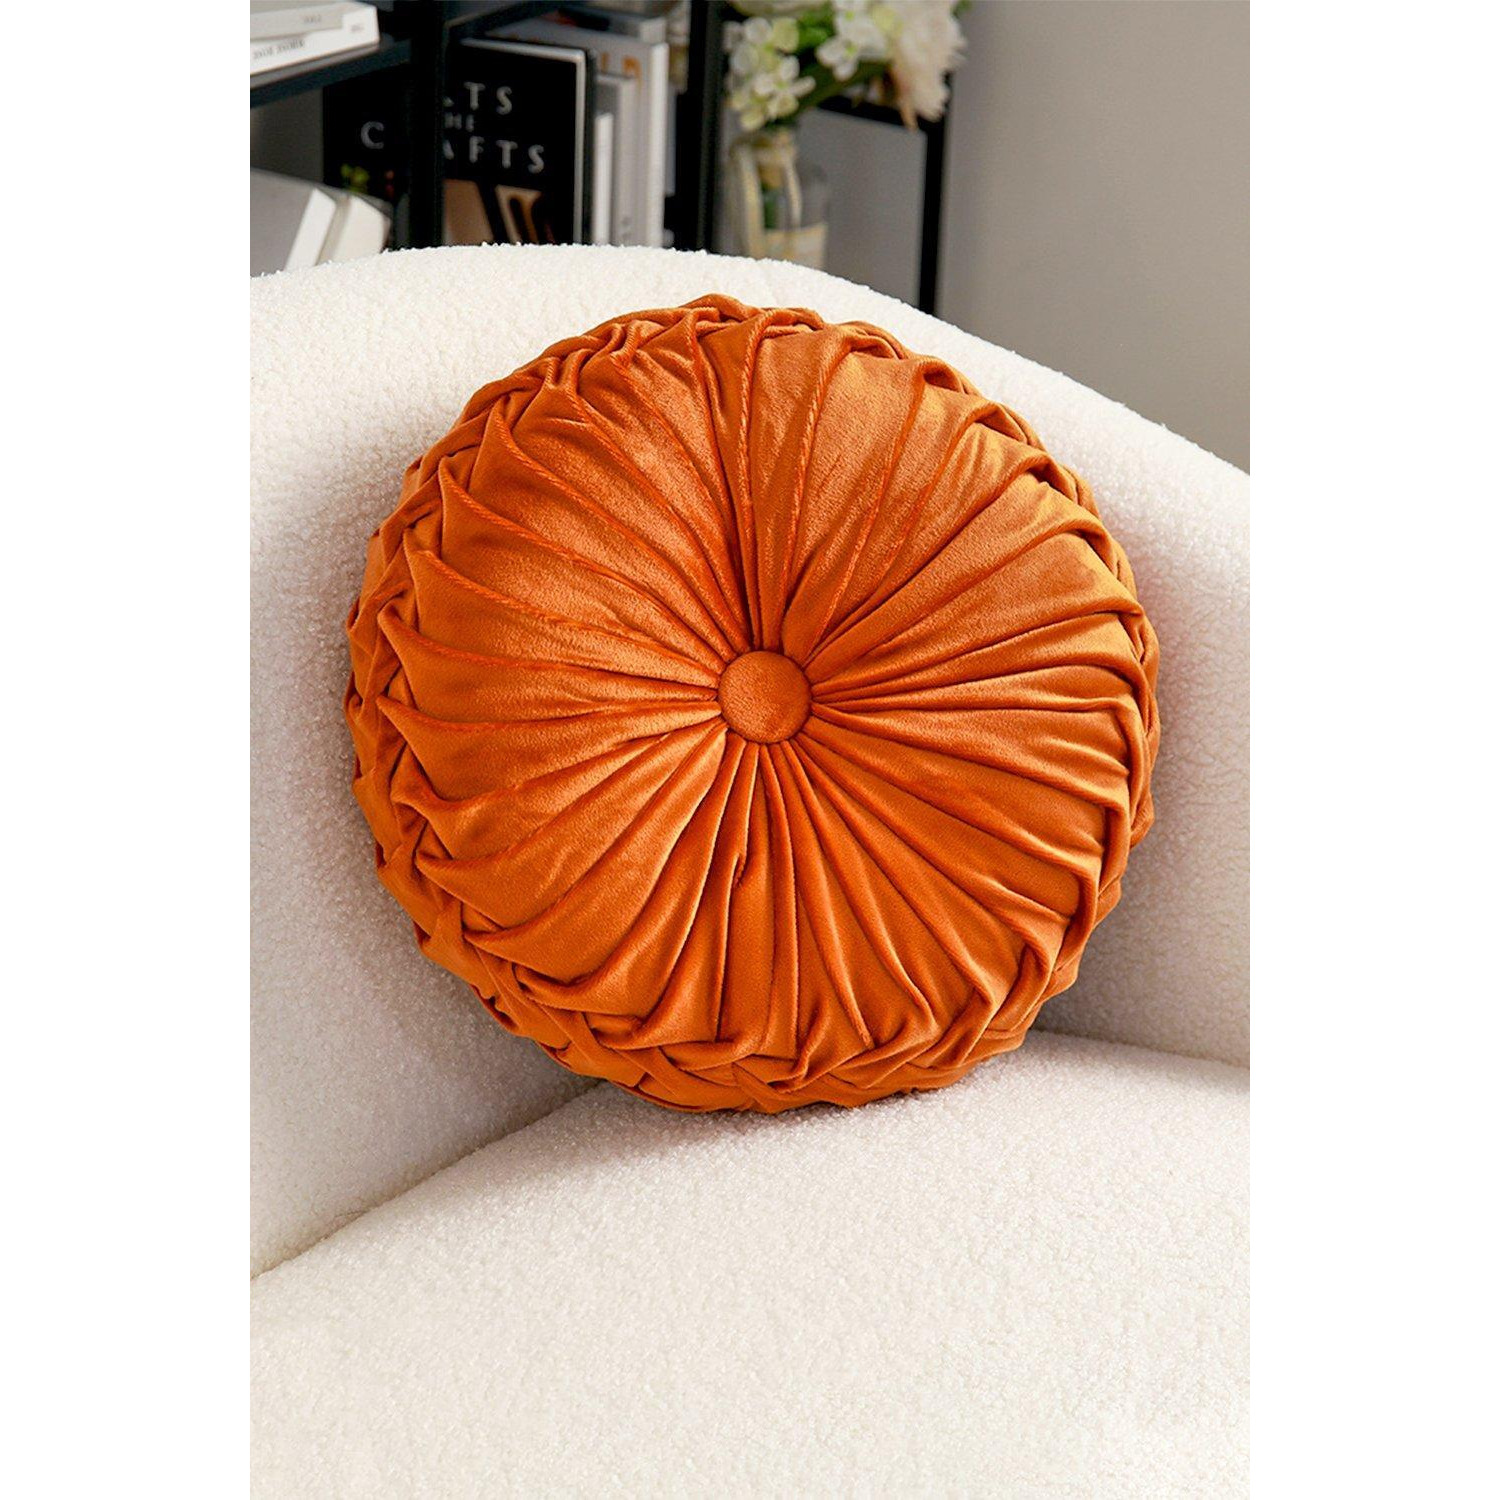 35cm Orange Round Velvet Pleated Pumpkin Throw Pillow - image 1